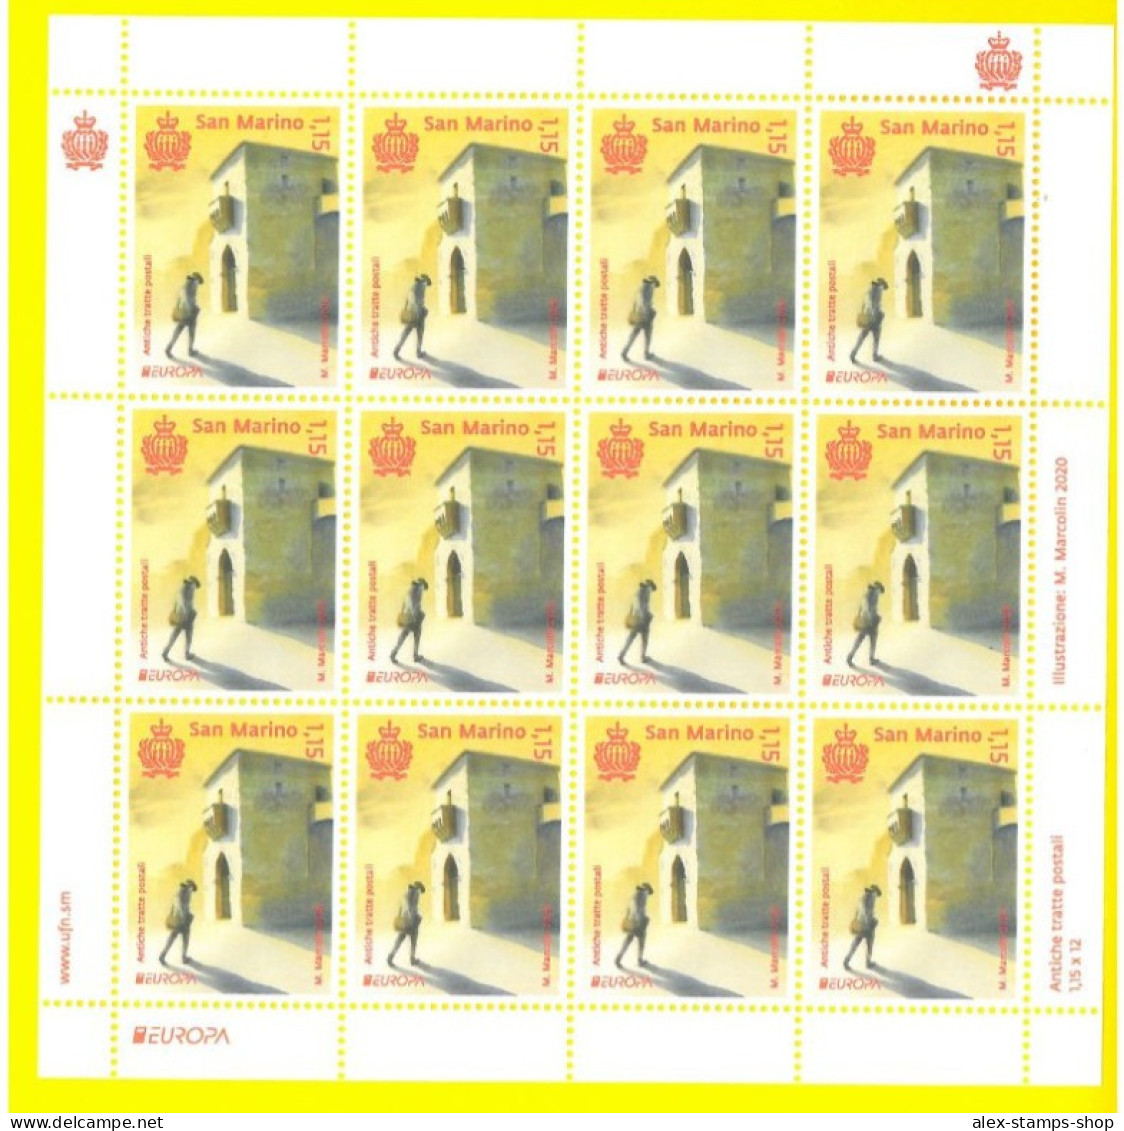 SAN MARINO 2020 Minifogli EUROPA Antiche Tratte Postali - NEW SHEET - Blocks & Sheetlets